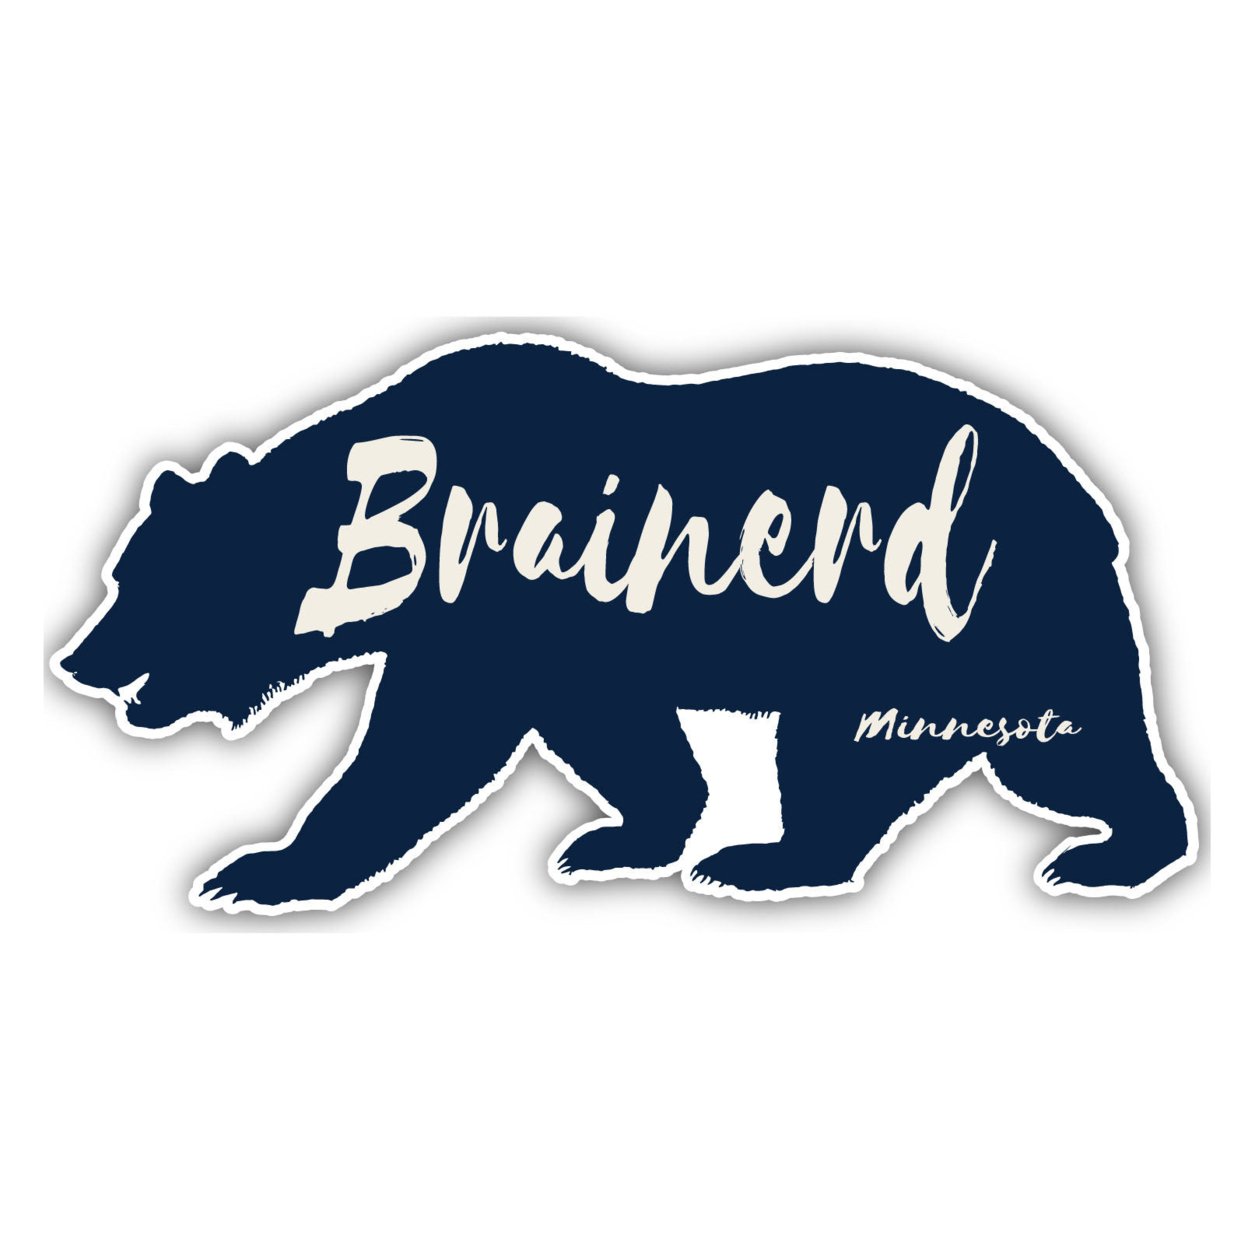 Brainerd Minnesota Souvenir Decorative Stickers (Choose Theme And Size) - Single Unit, 8-Inch, Camp Life